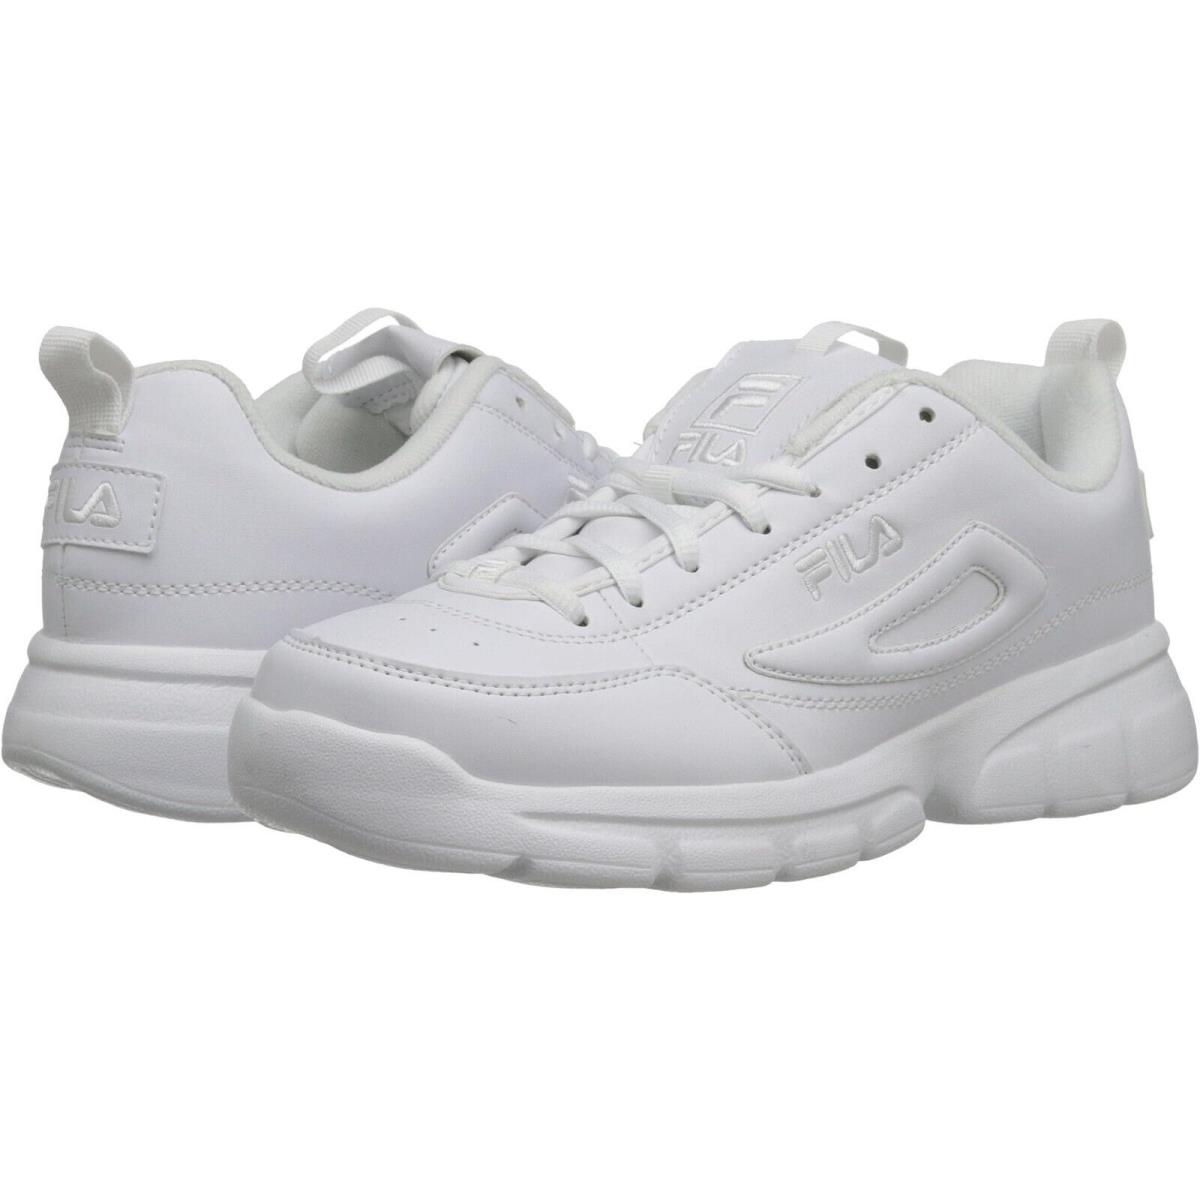 Men Fila Disruptor SE Casual Shoes 1SX60022-100 White White